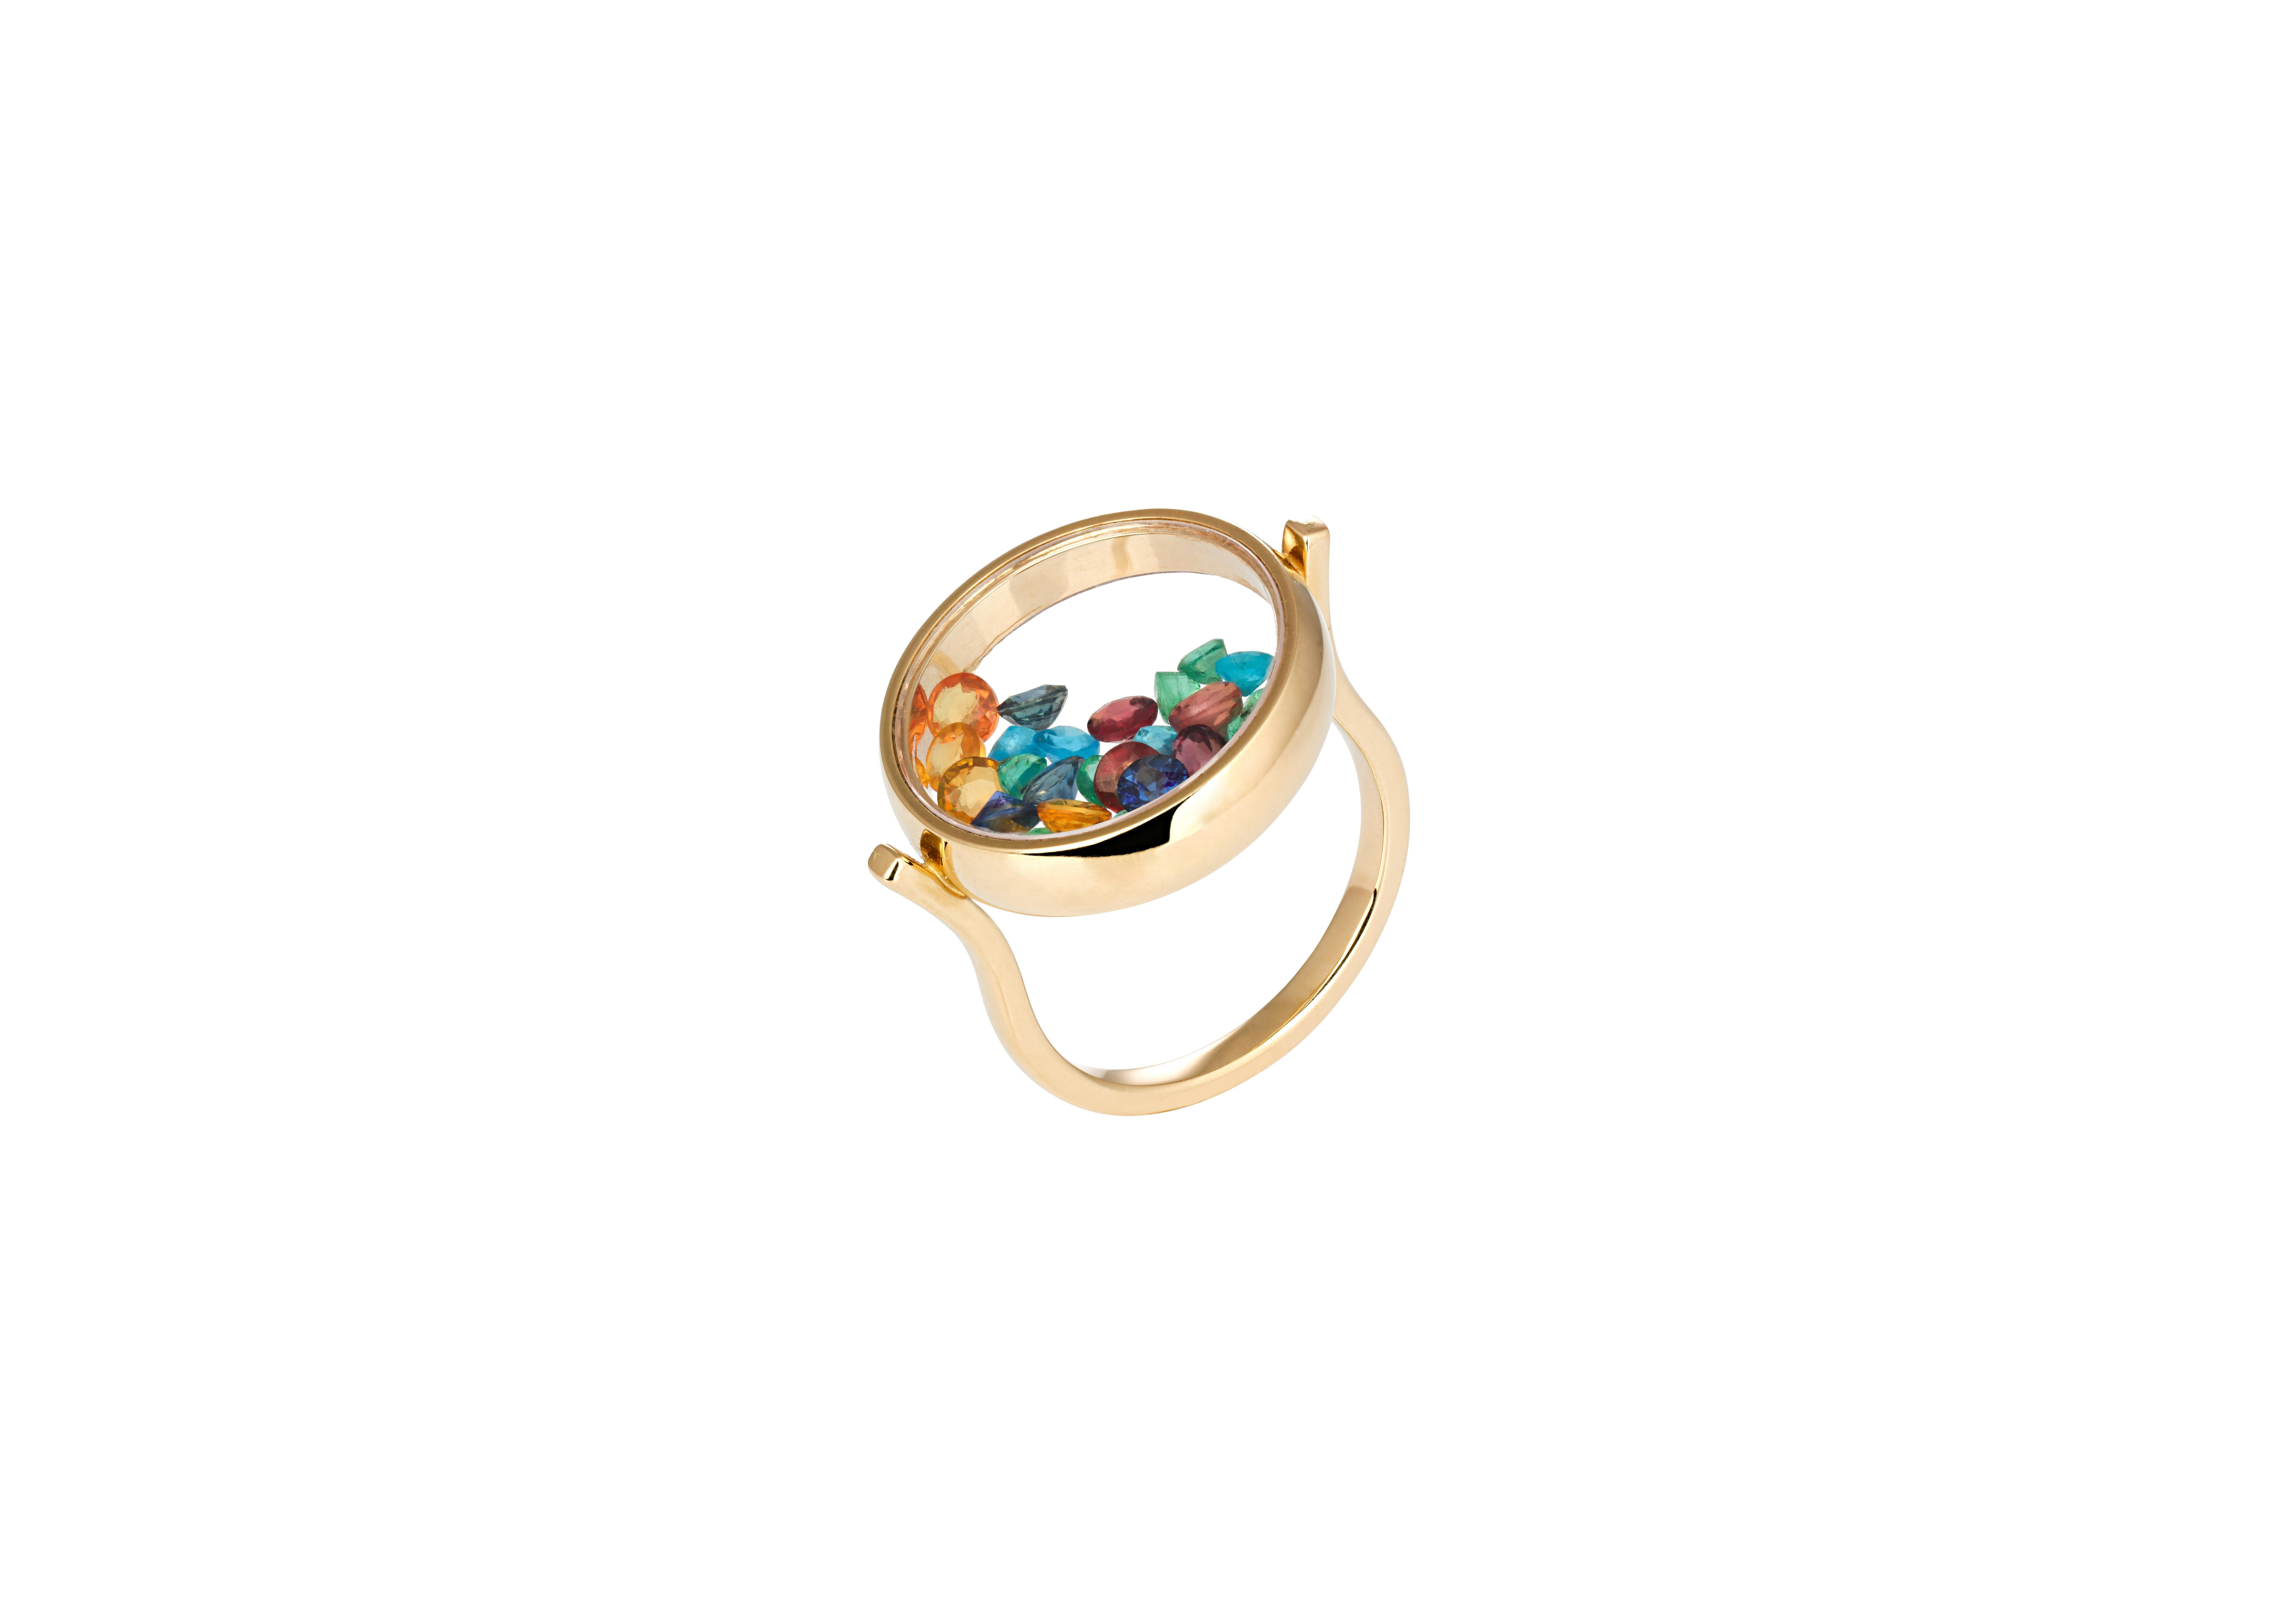 For Sale:  Multicolor gemstone 14k gold ring.  11